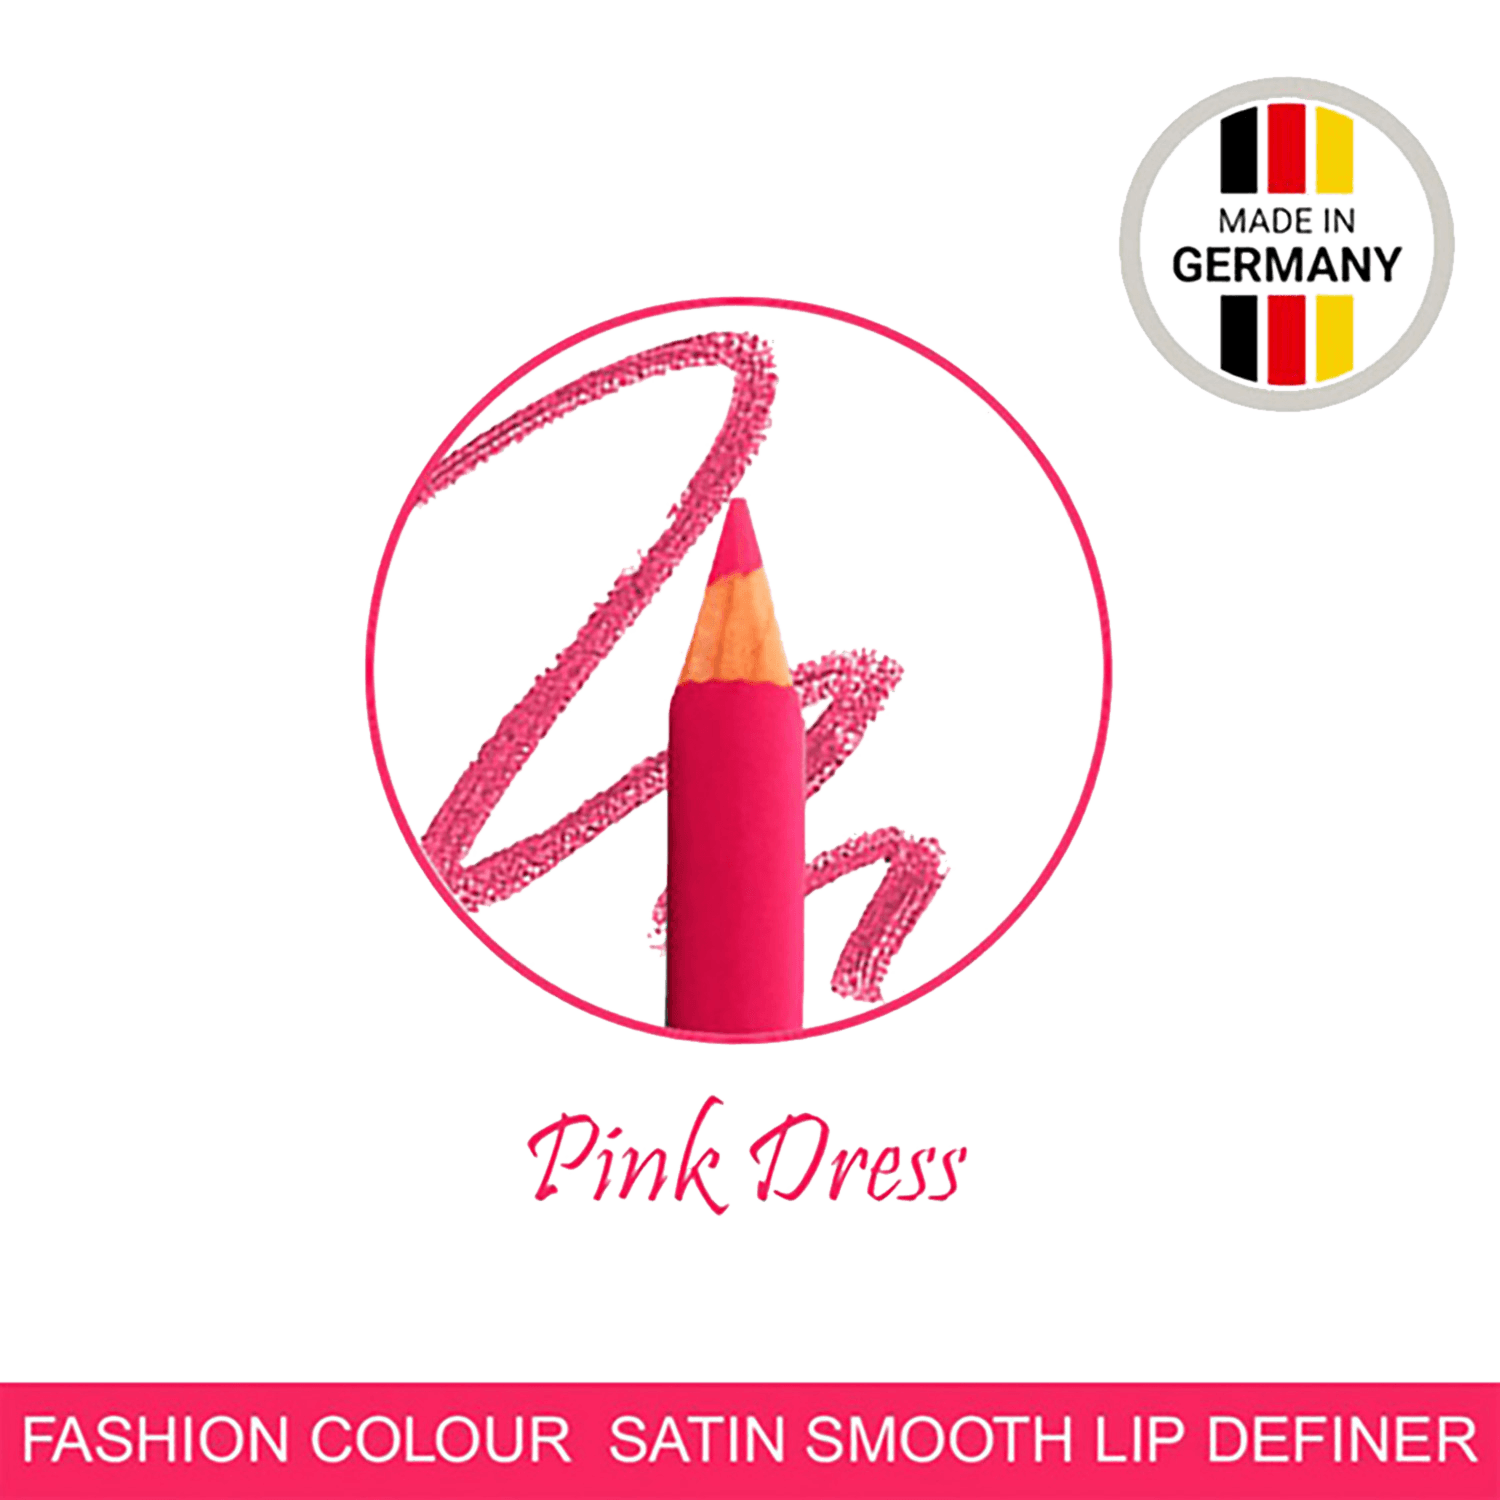 Fashion Colour | Fashion Colour Satin Smooth Lip Definer - 06 Pink Dress (1.41g)